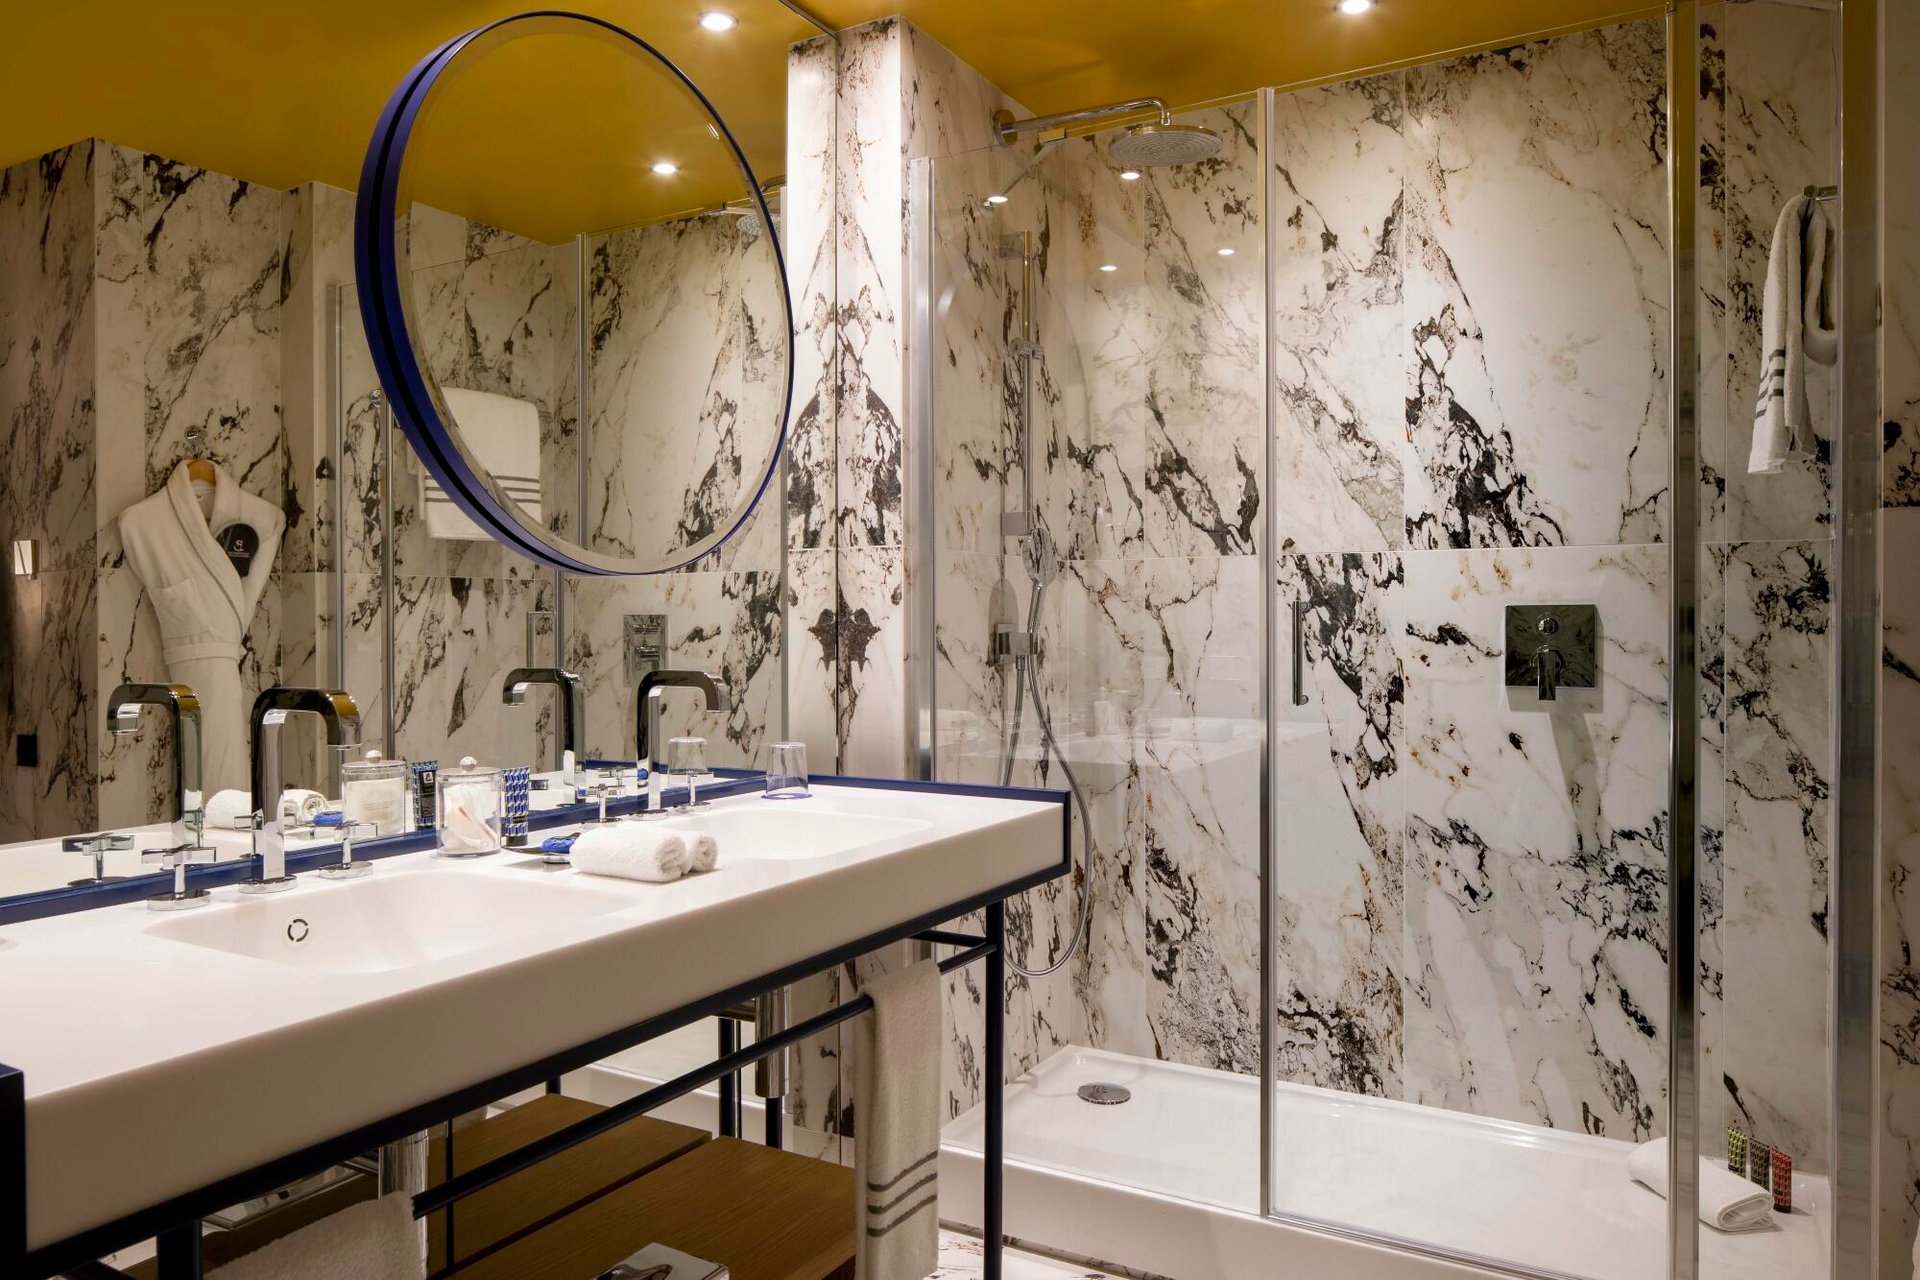 Bathroom Studio Saint-Germain - Hotel Bel Ami Paris